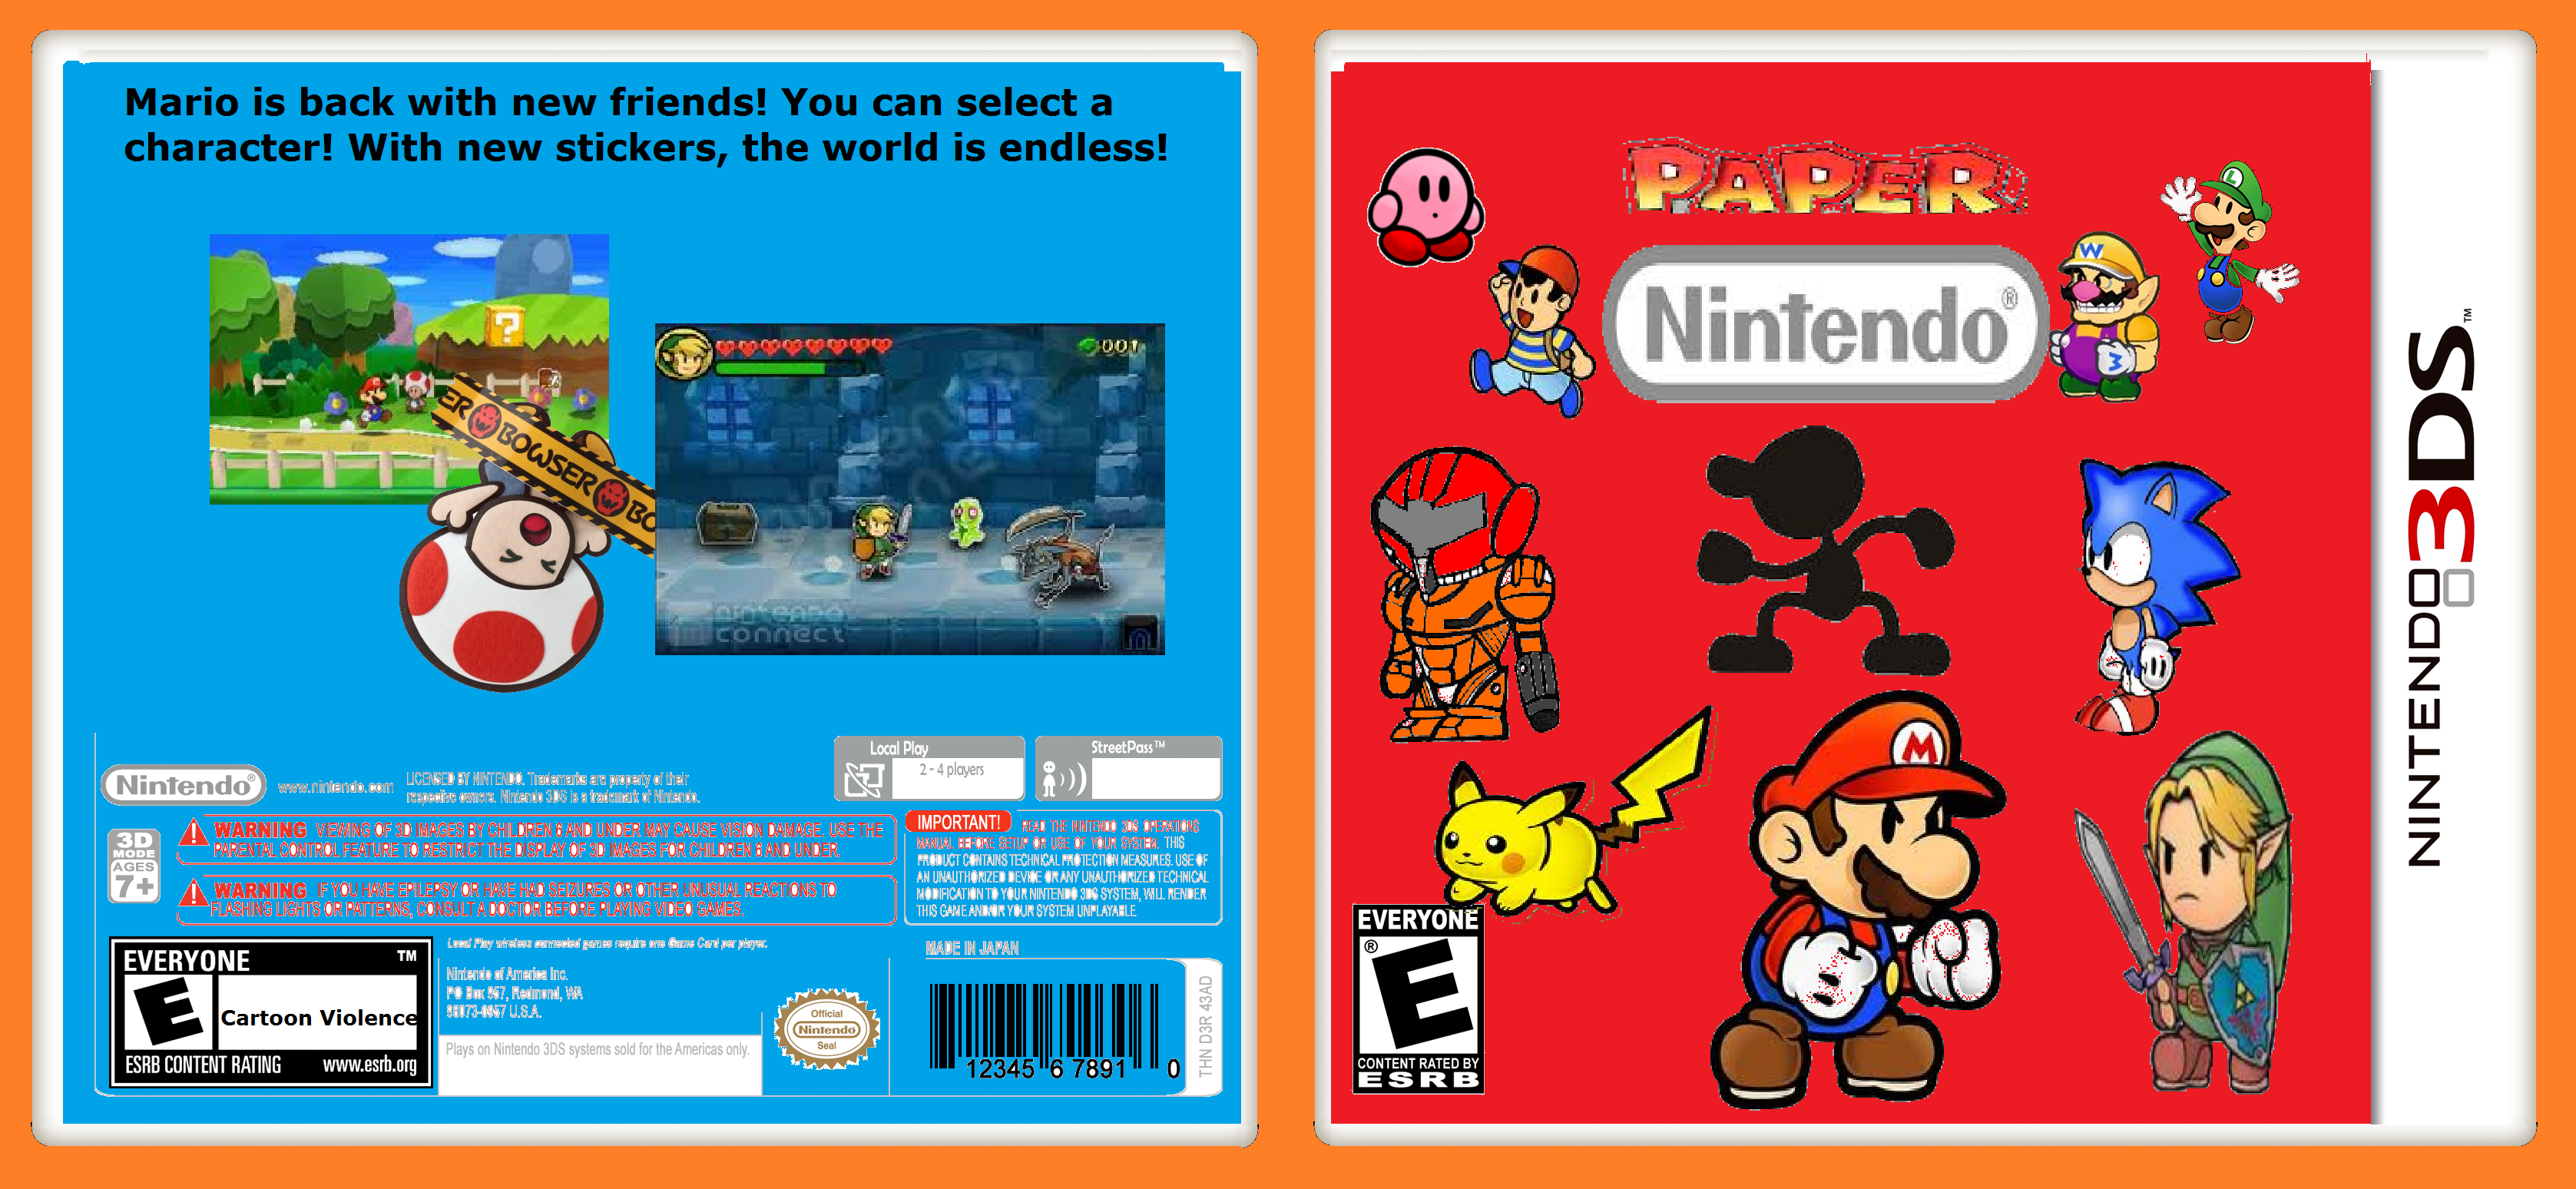 Paper Nintendo box cover